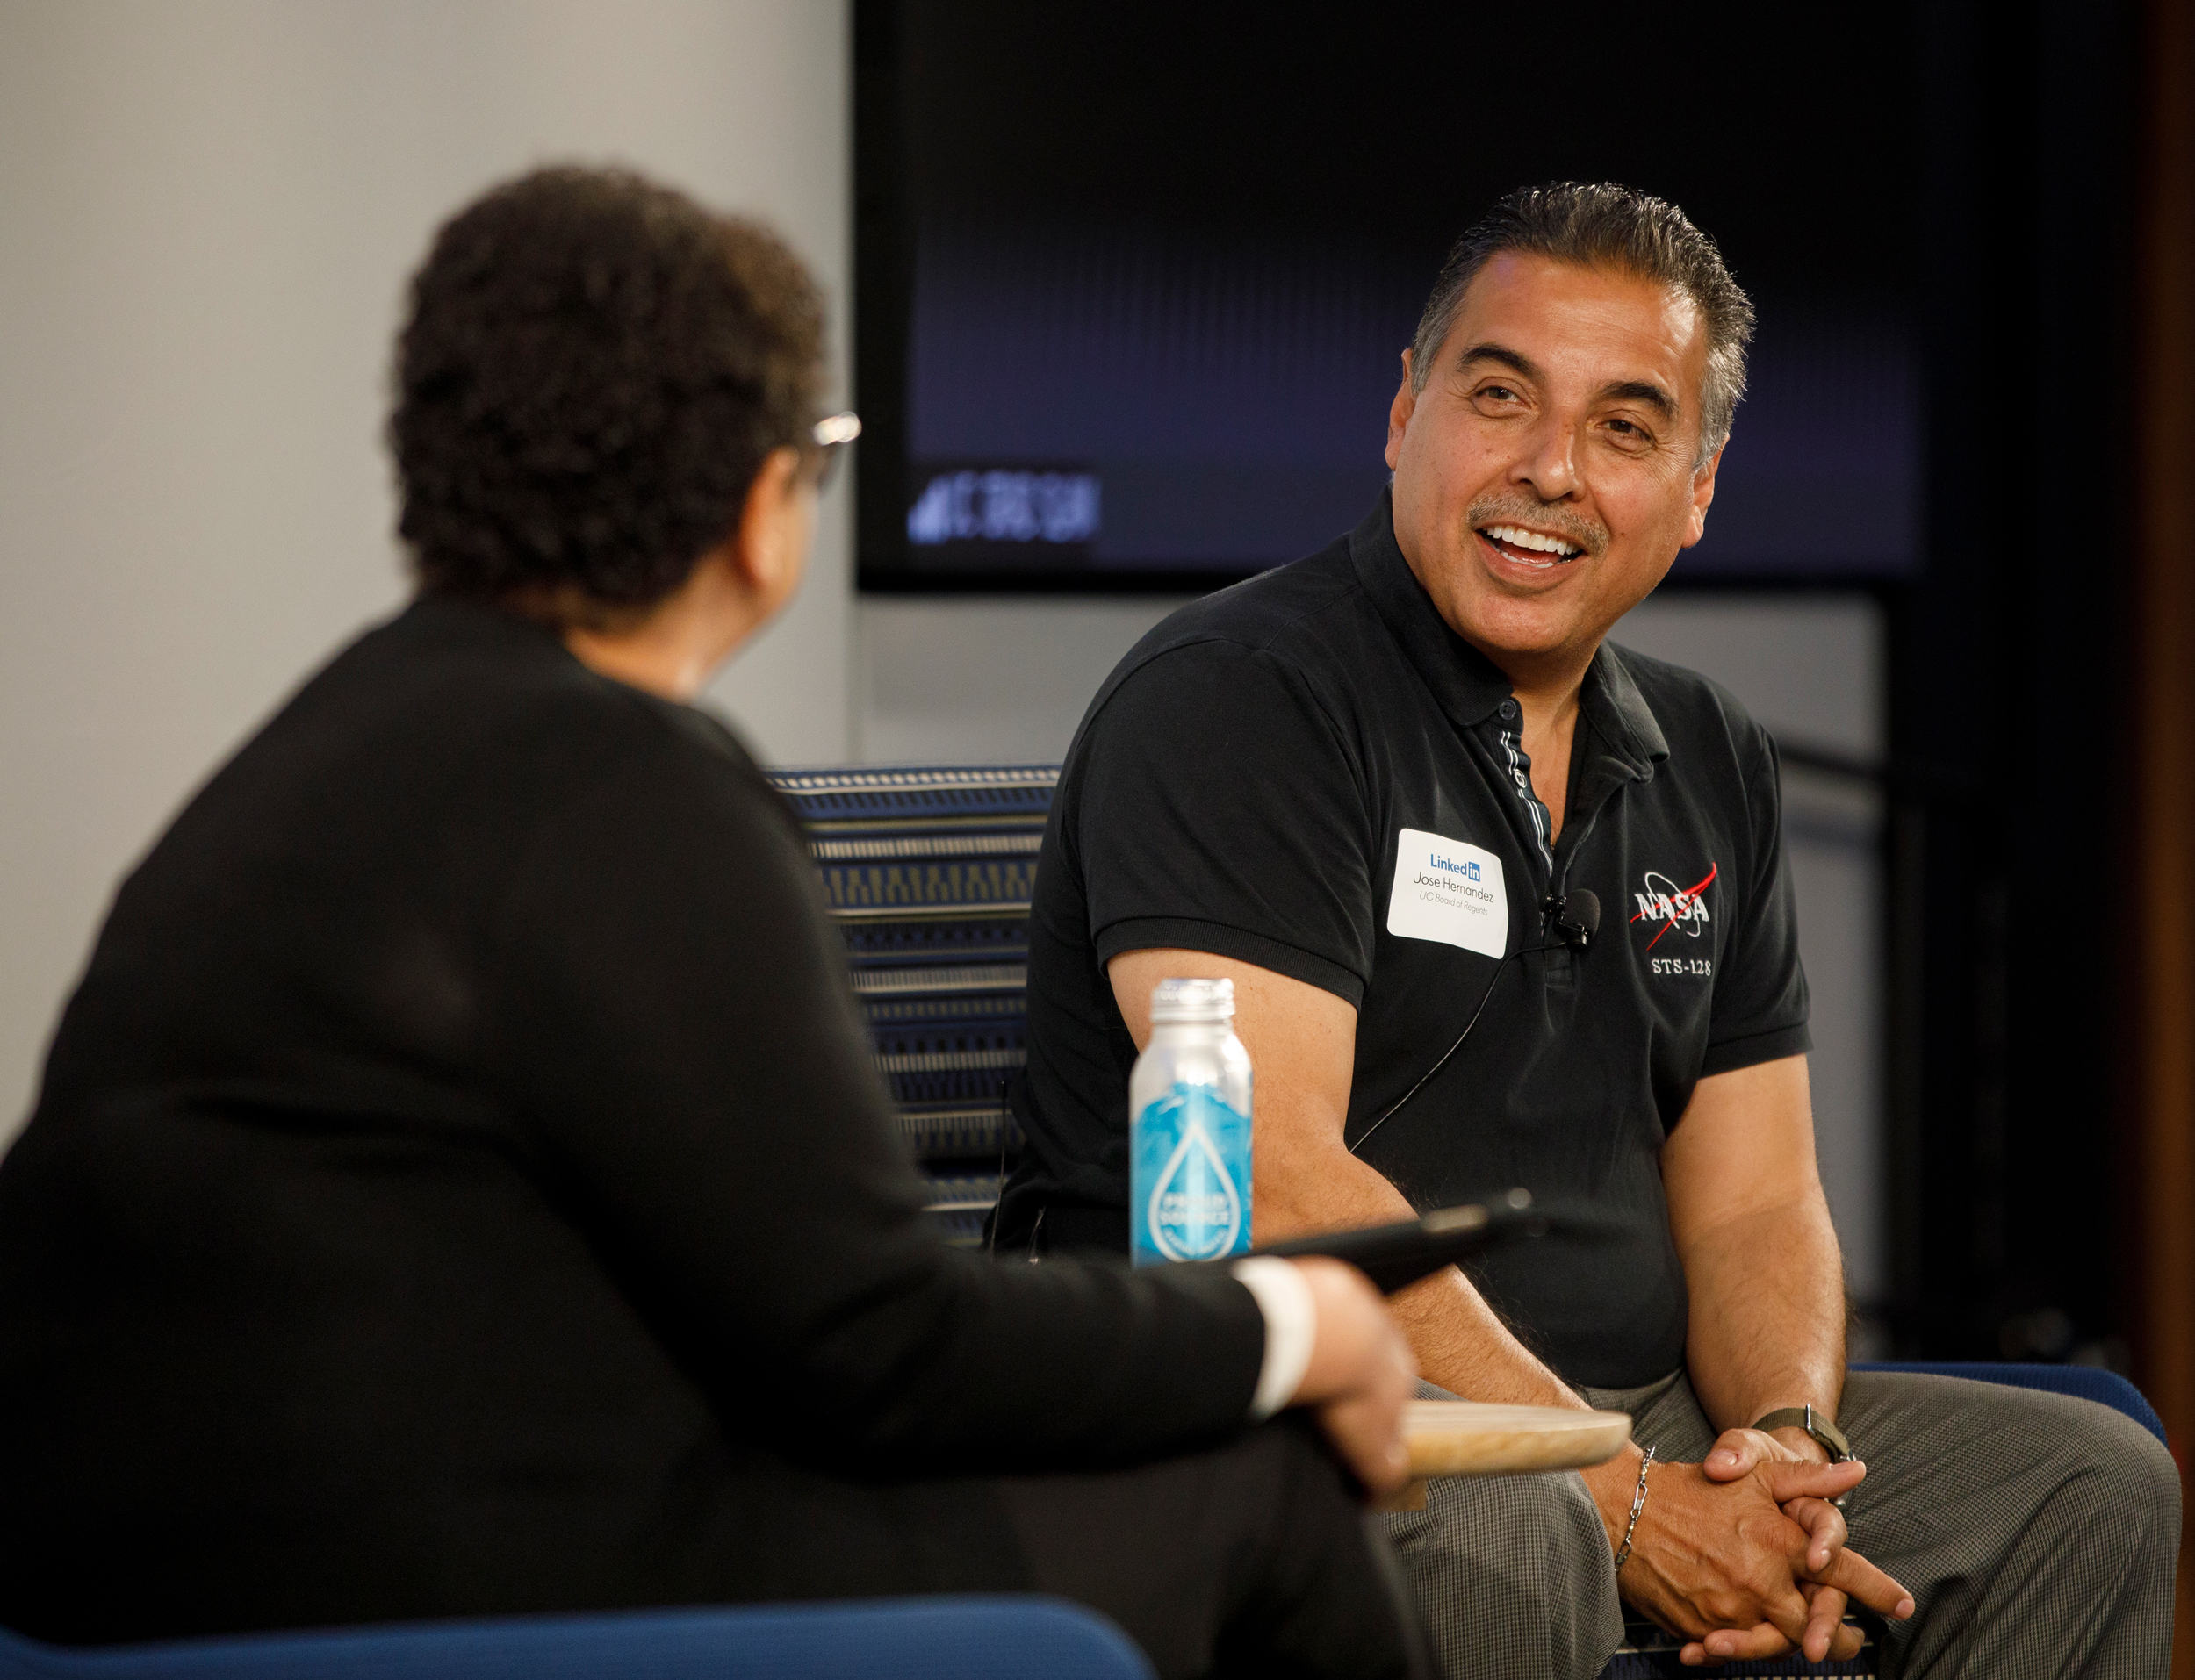 Persistence was key to UC regent and NASA astronaut José Hernández's achievement of lifelong dream